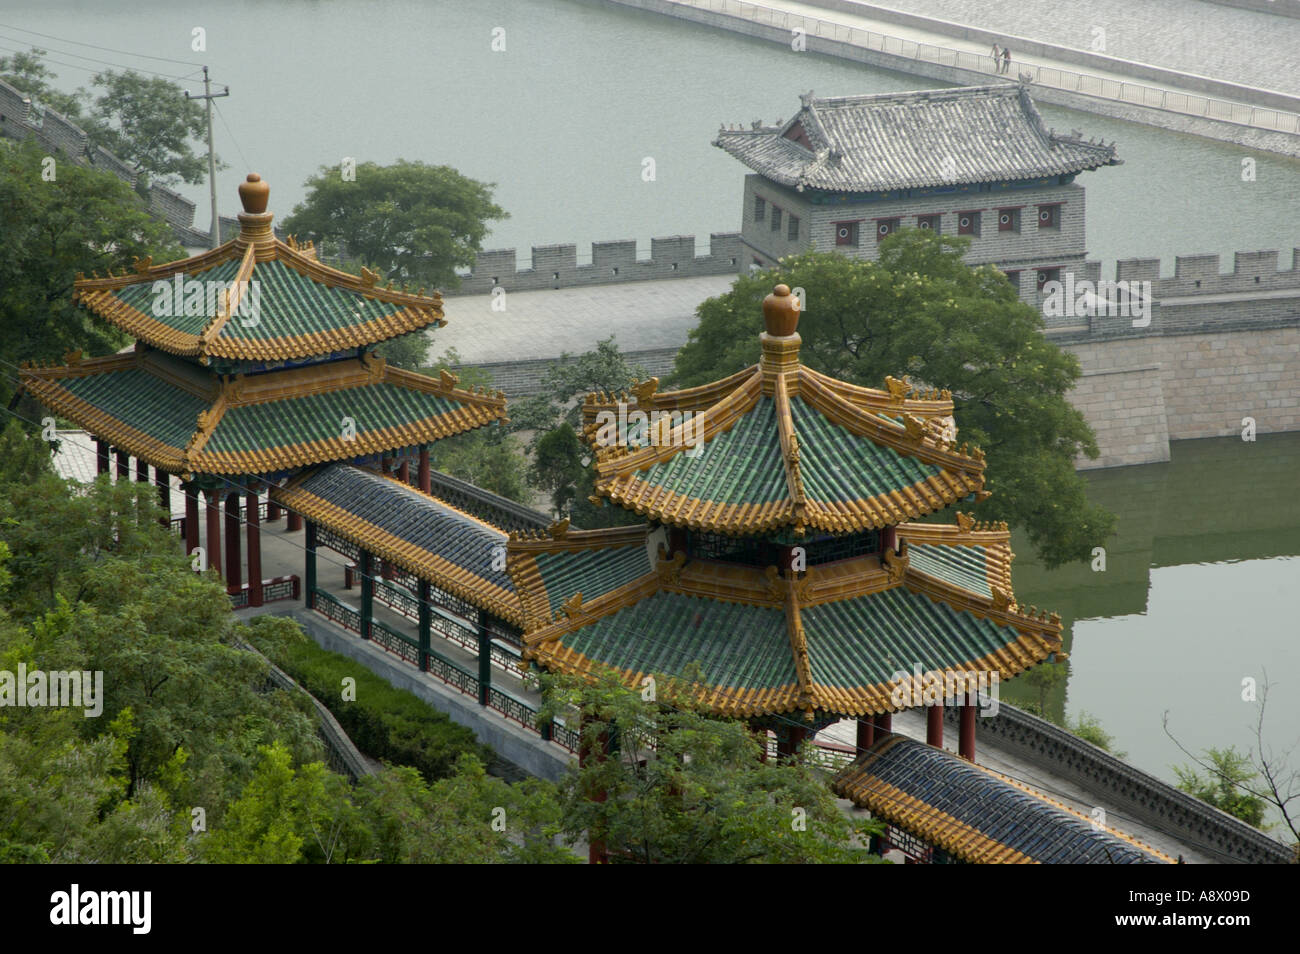 Pavilions overlooking a river on the Great Wall at Juyongguan Gate near Badaling, China. Stock Photo